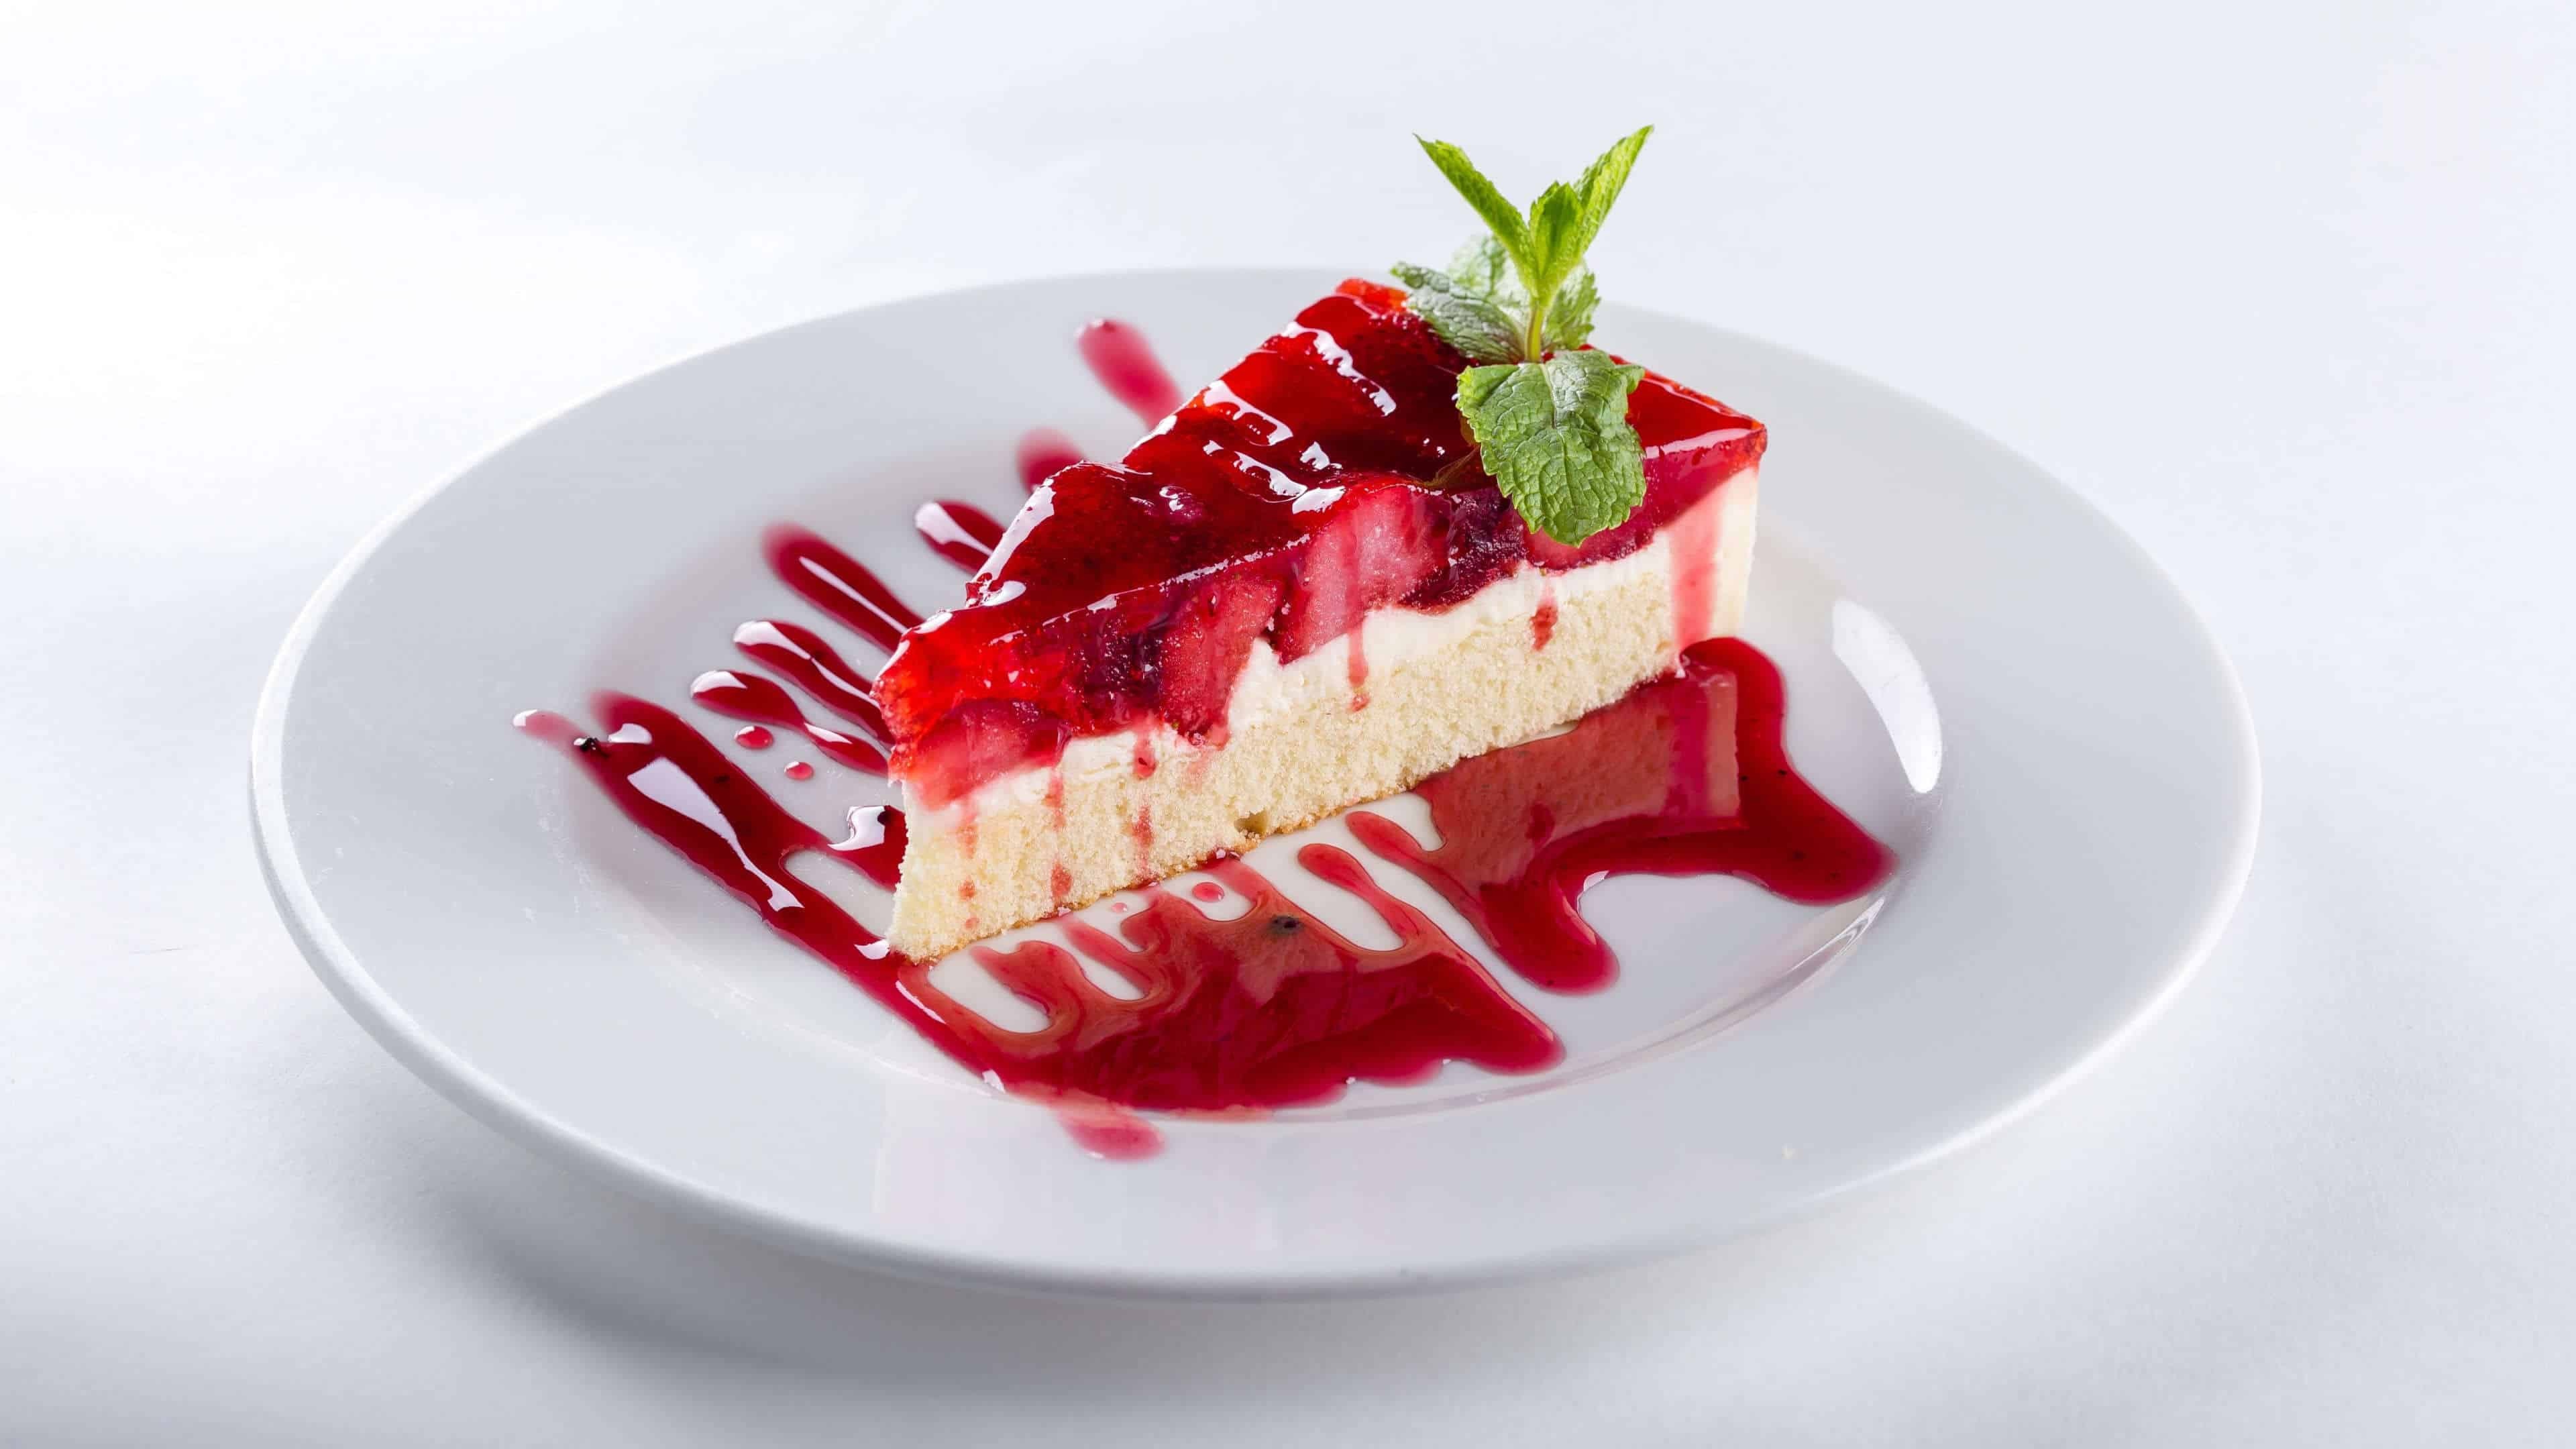 Cheesecake: Strawberry, Cake, Categorized into two basic types: baked and unbaked. 3840x2160 4K Background.